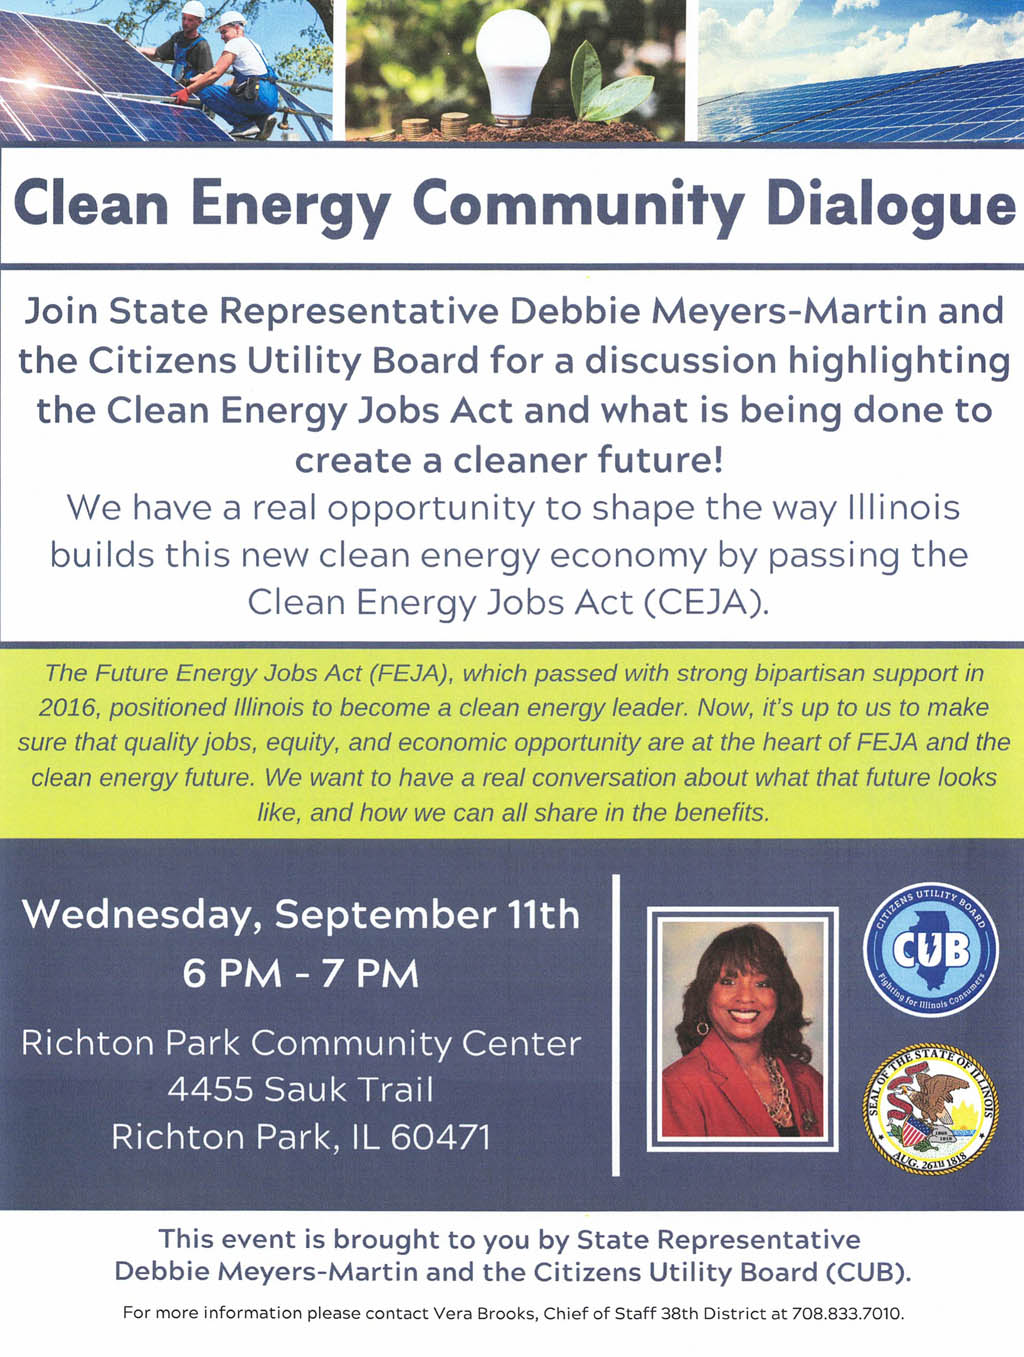 9/11/2019 Clean Energy Dialog